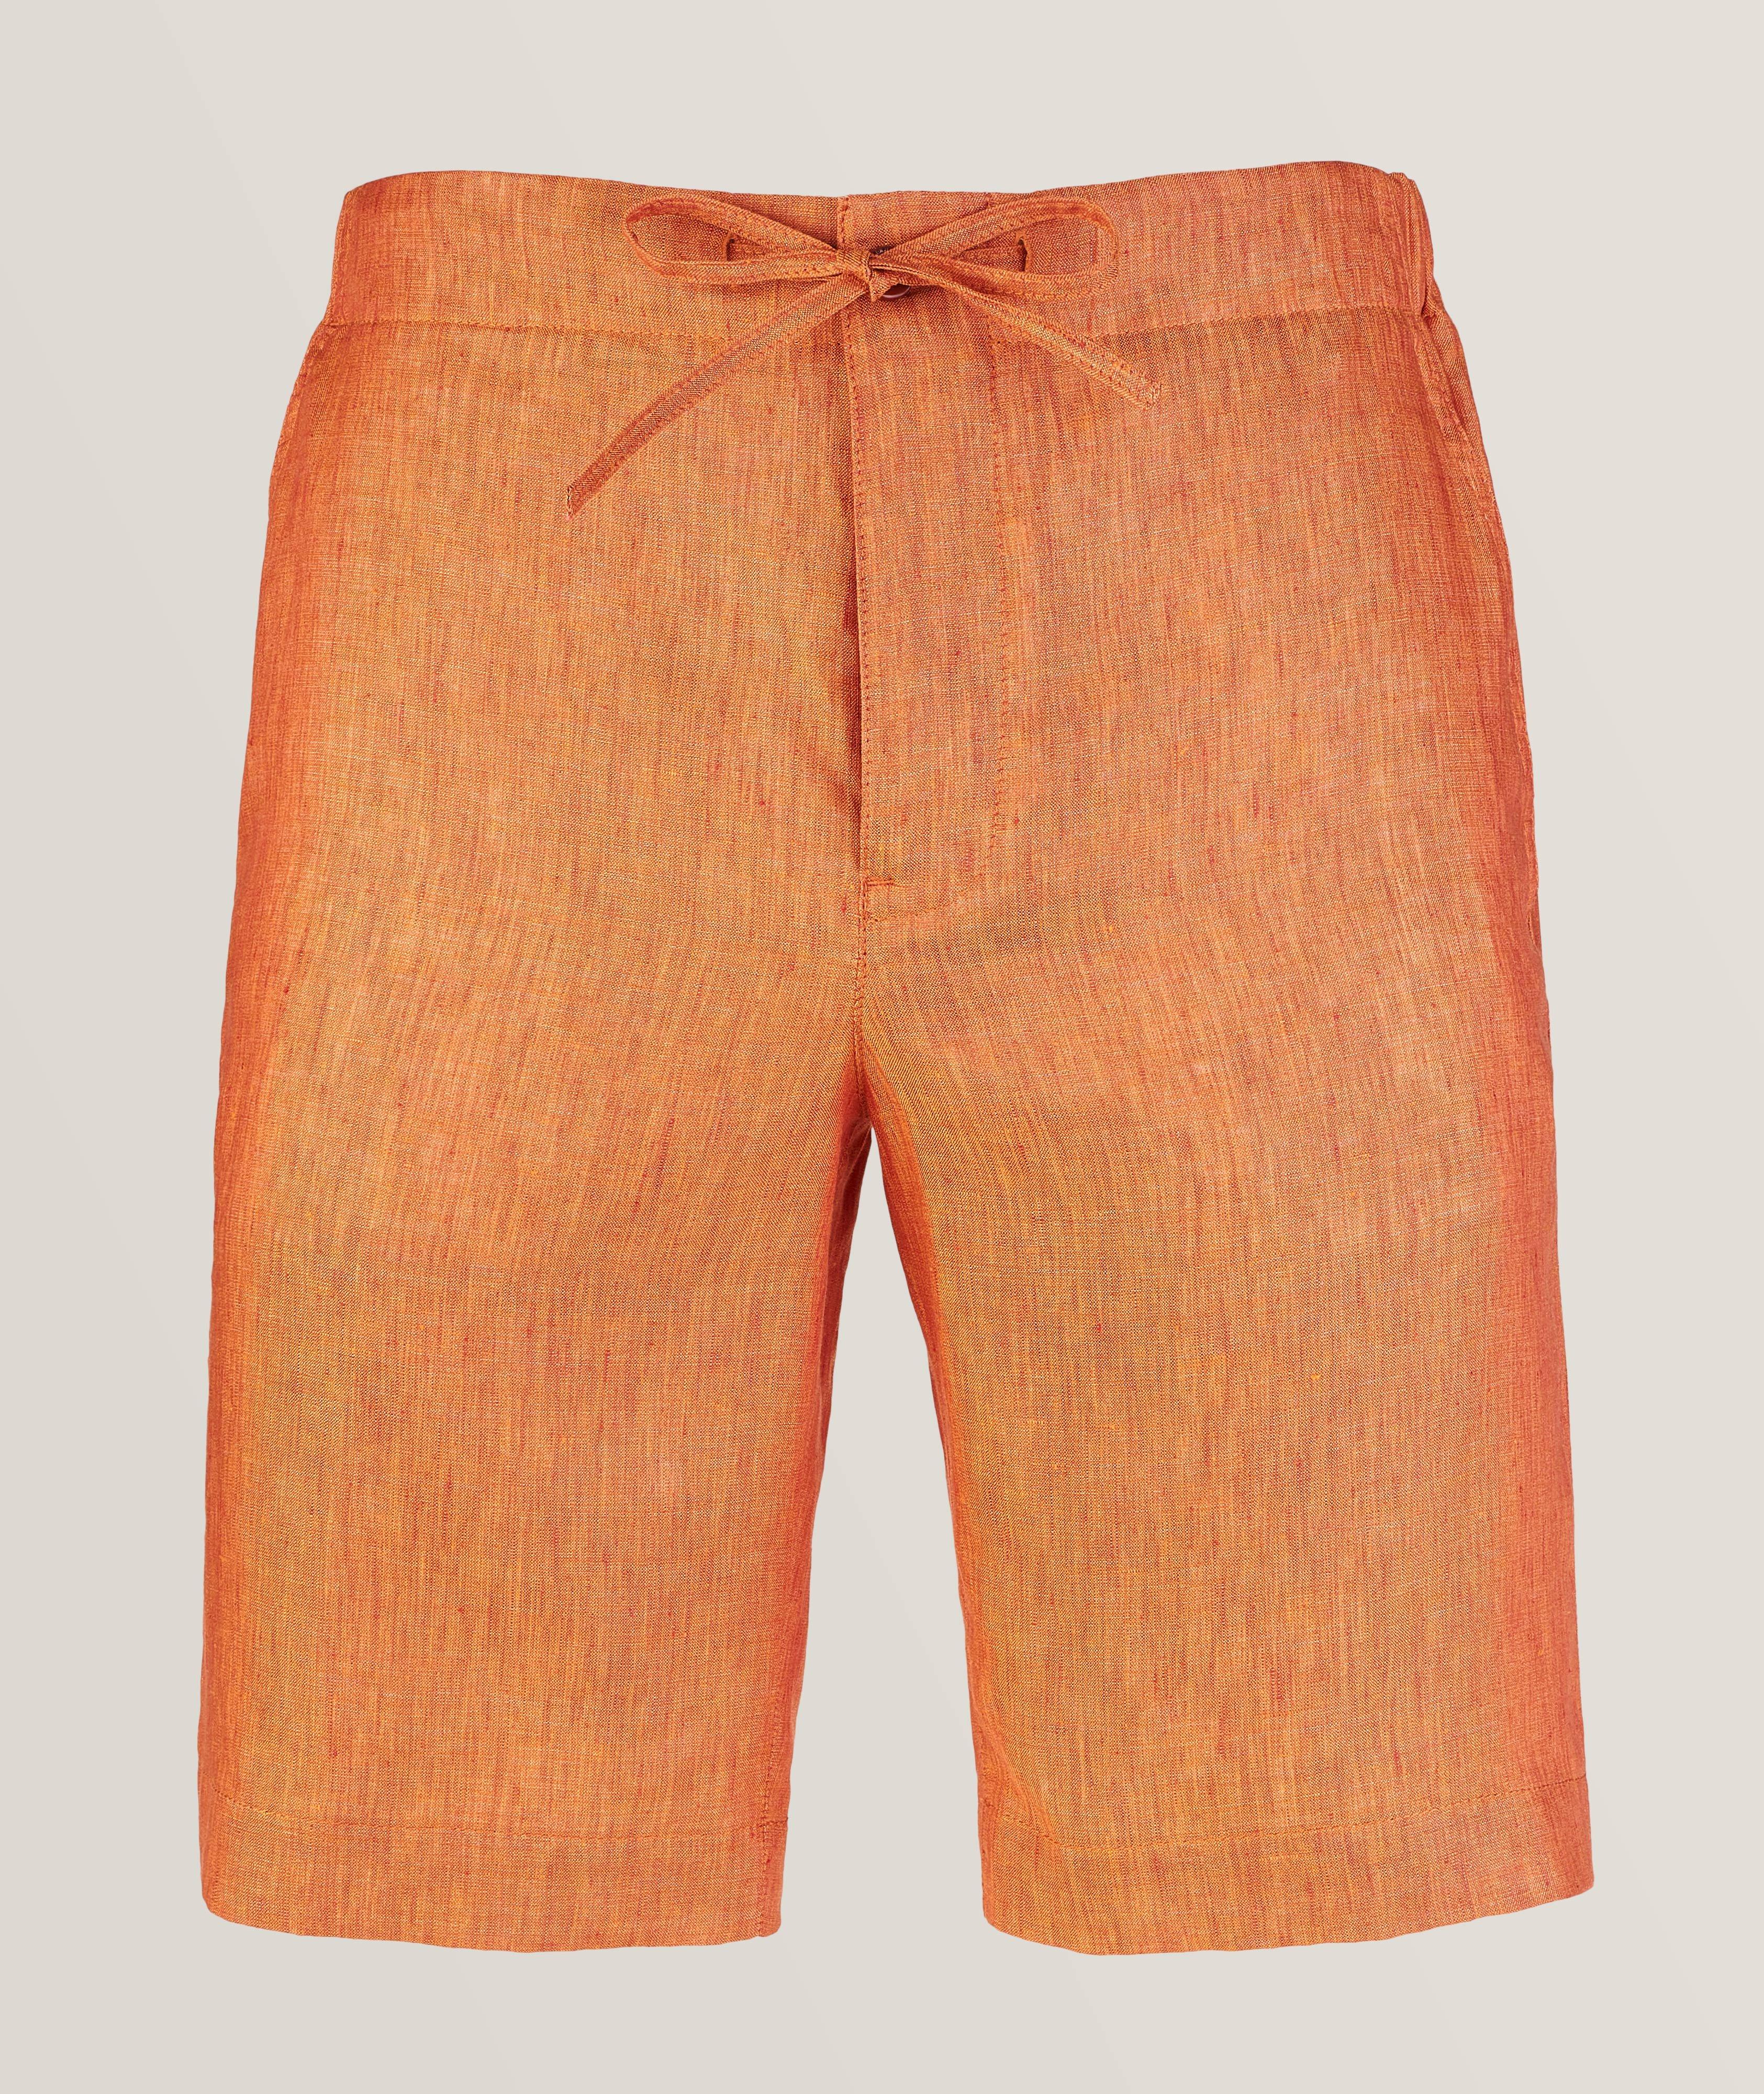 Textured Linen Bermuda Shorts image 0